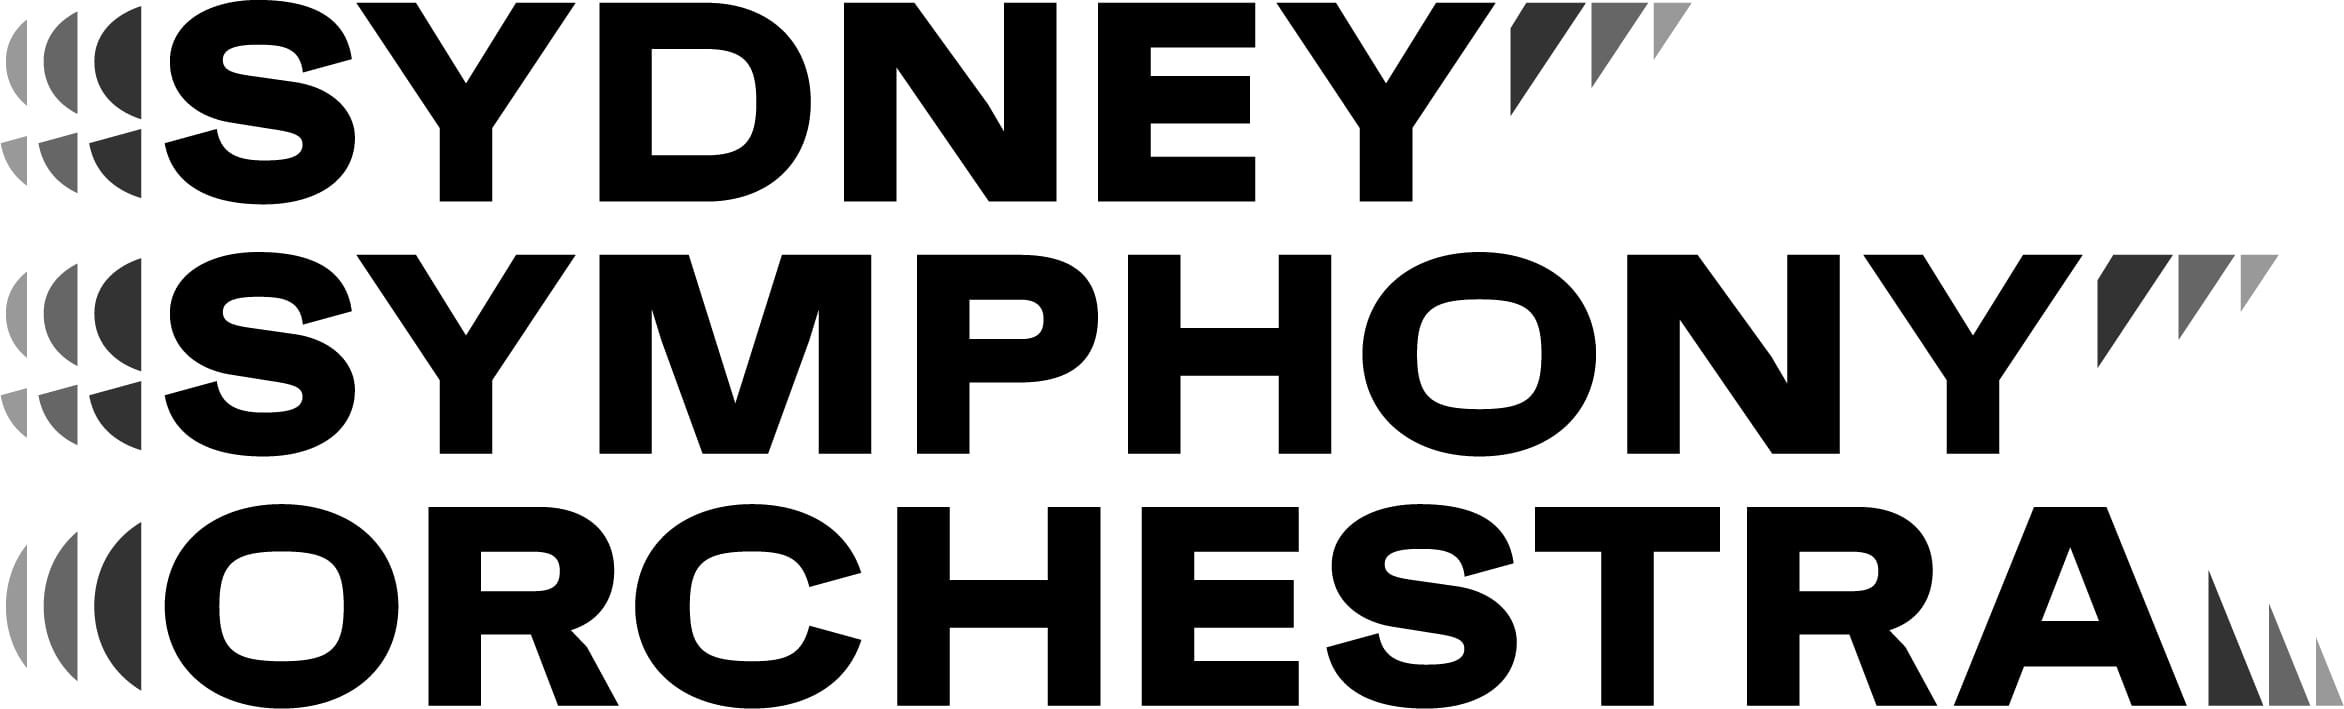 Sydney-Symphony-Orchestra-Logo_SEO